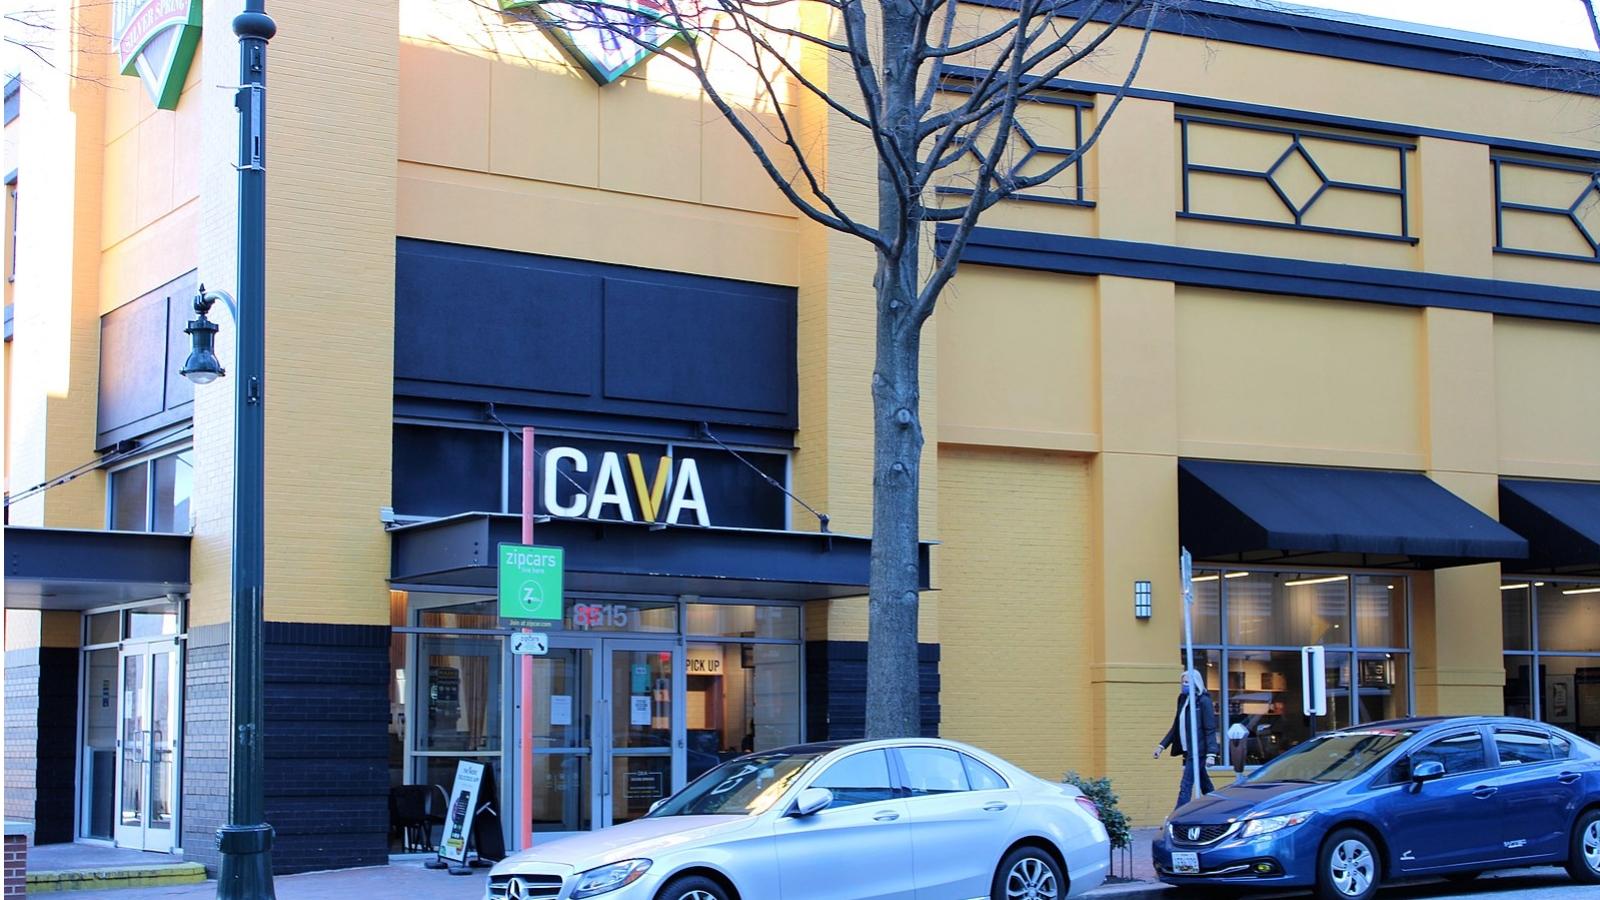 CAVA restaurant